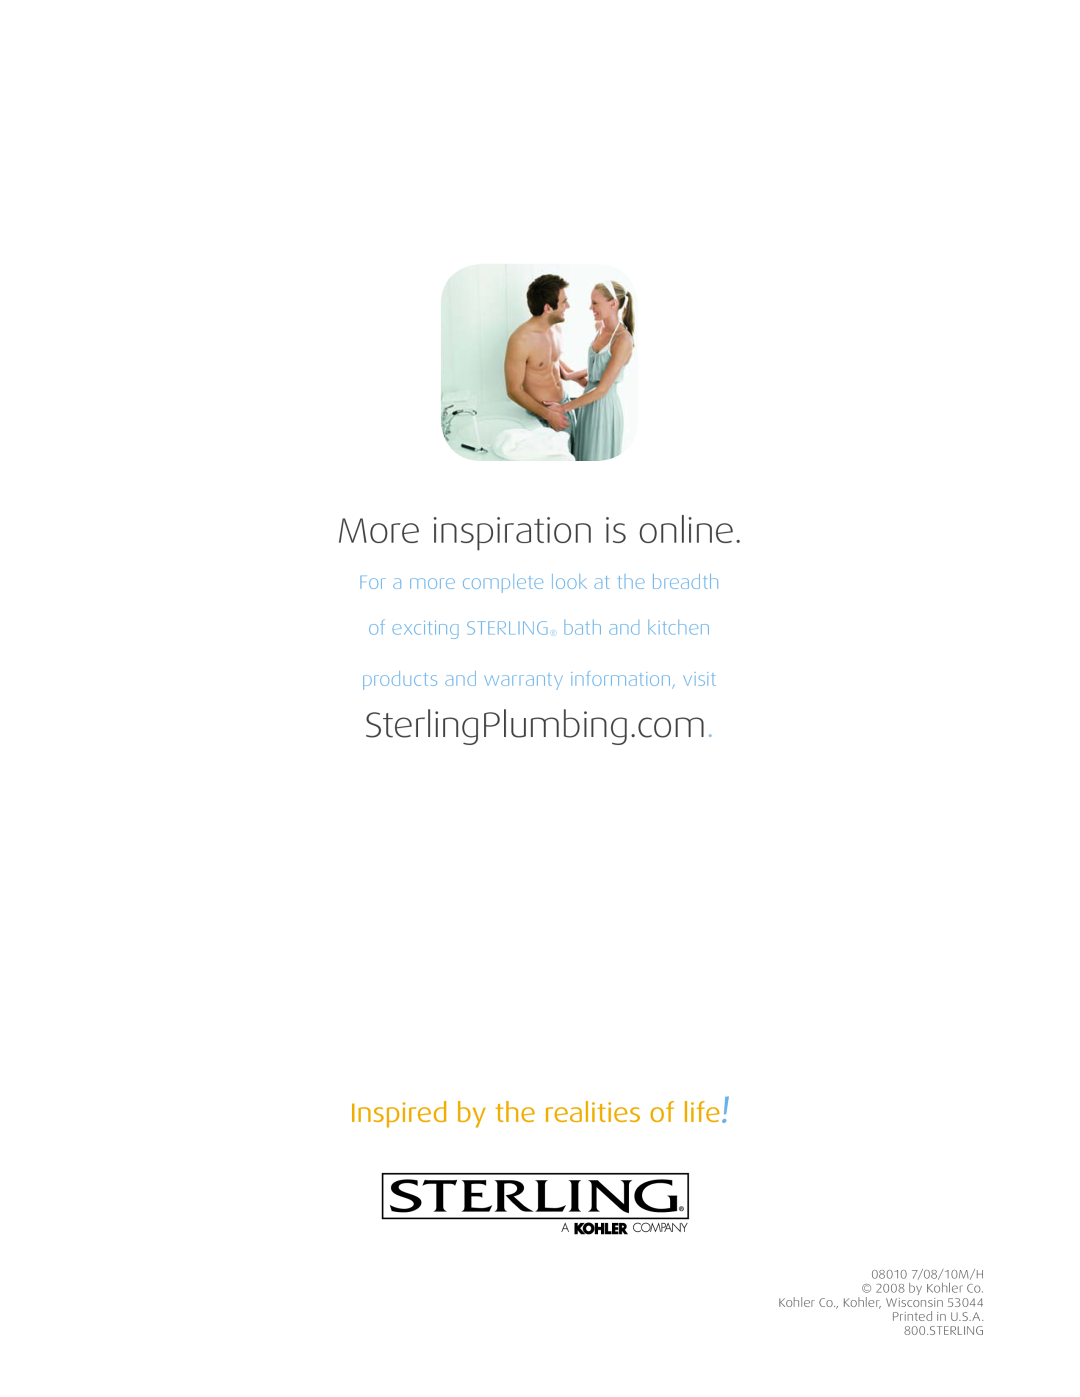 Sterling Plumbing Toilet & Lavatories manual More inspiration is online, SterlingPlumbing.com, 08010 7/08/10M/H 